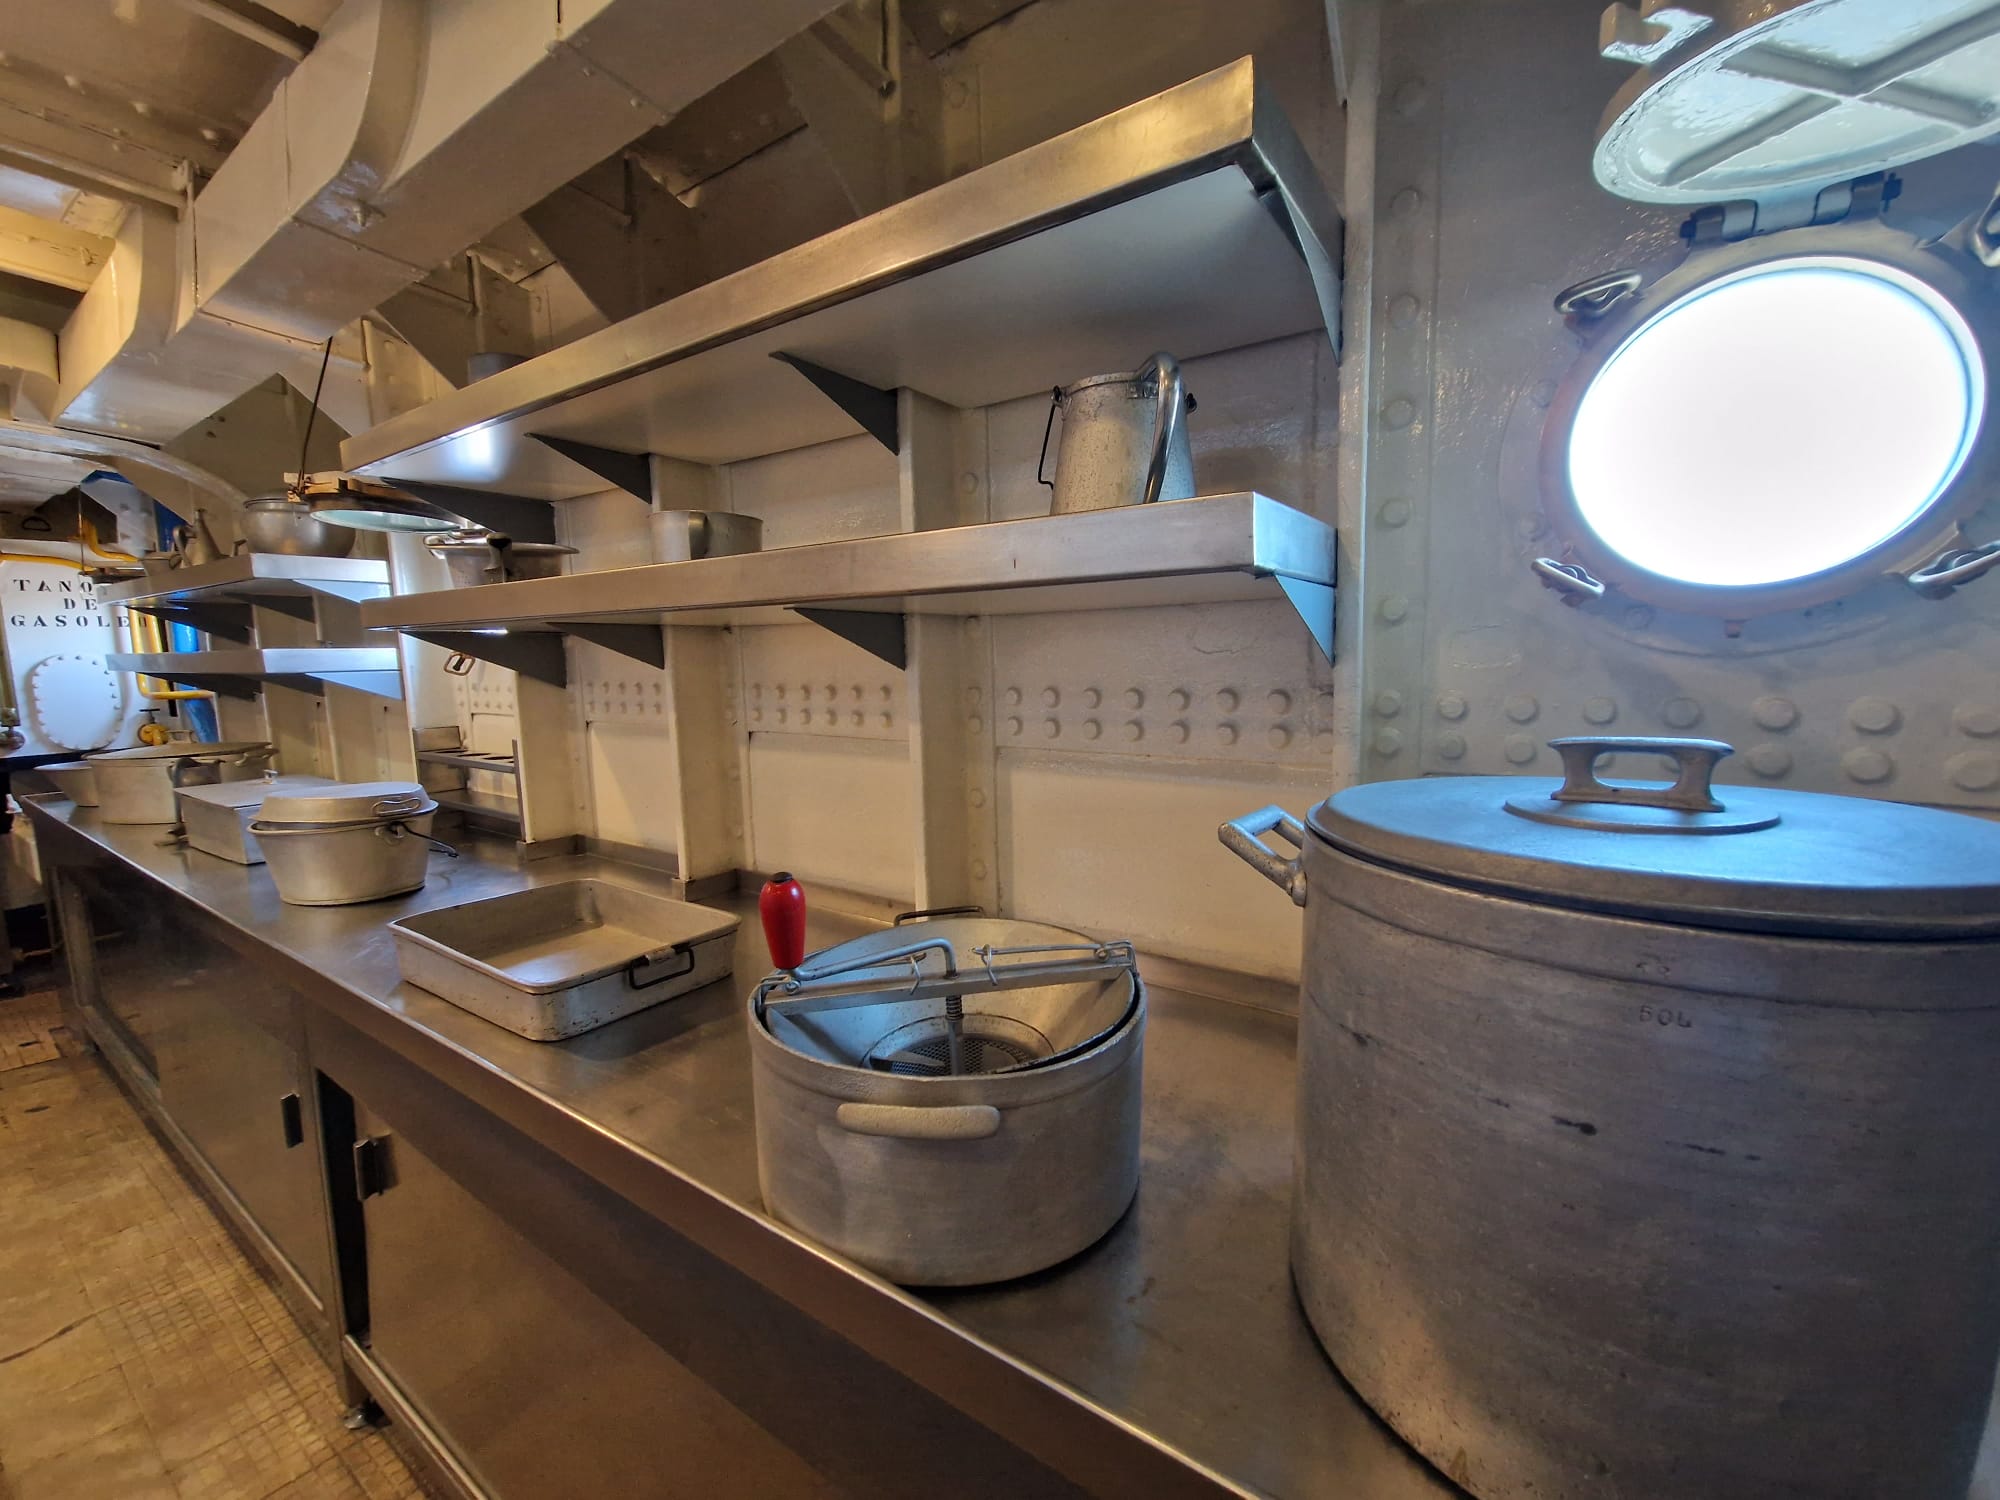 Panelas na cozinha do navio Gil Eannes